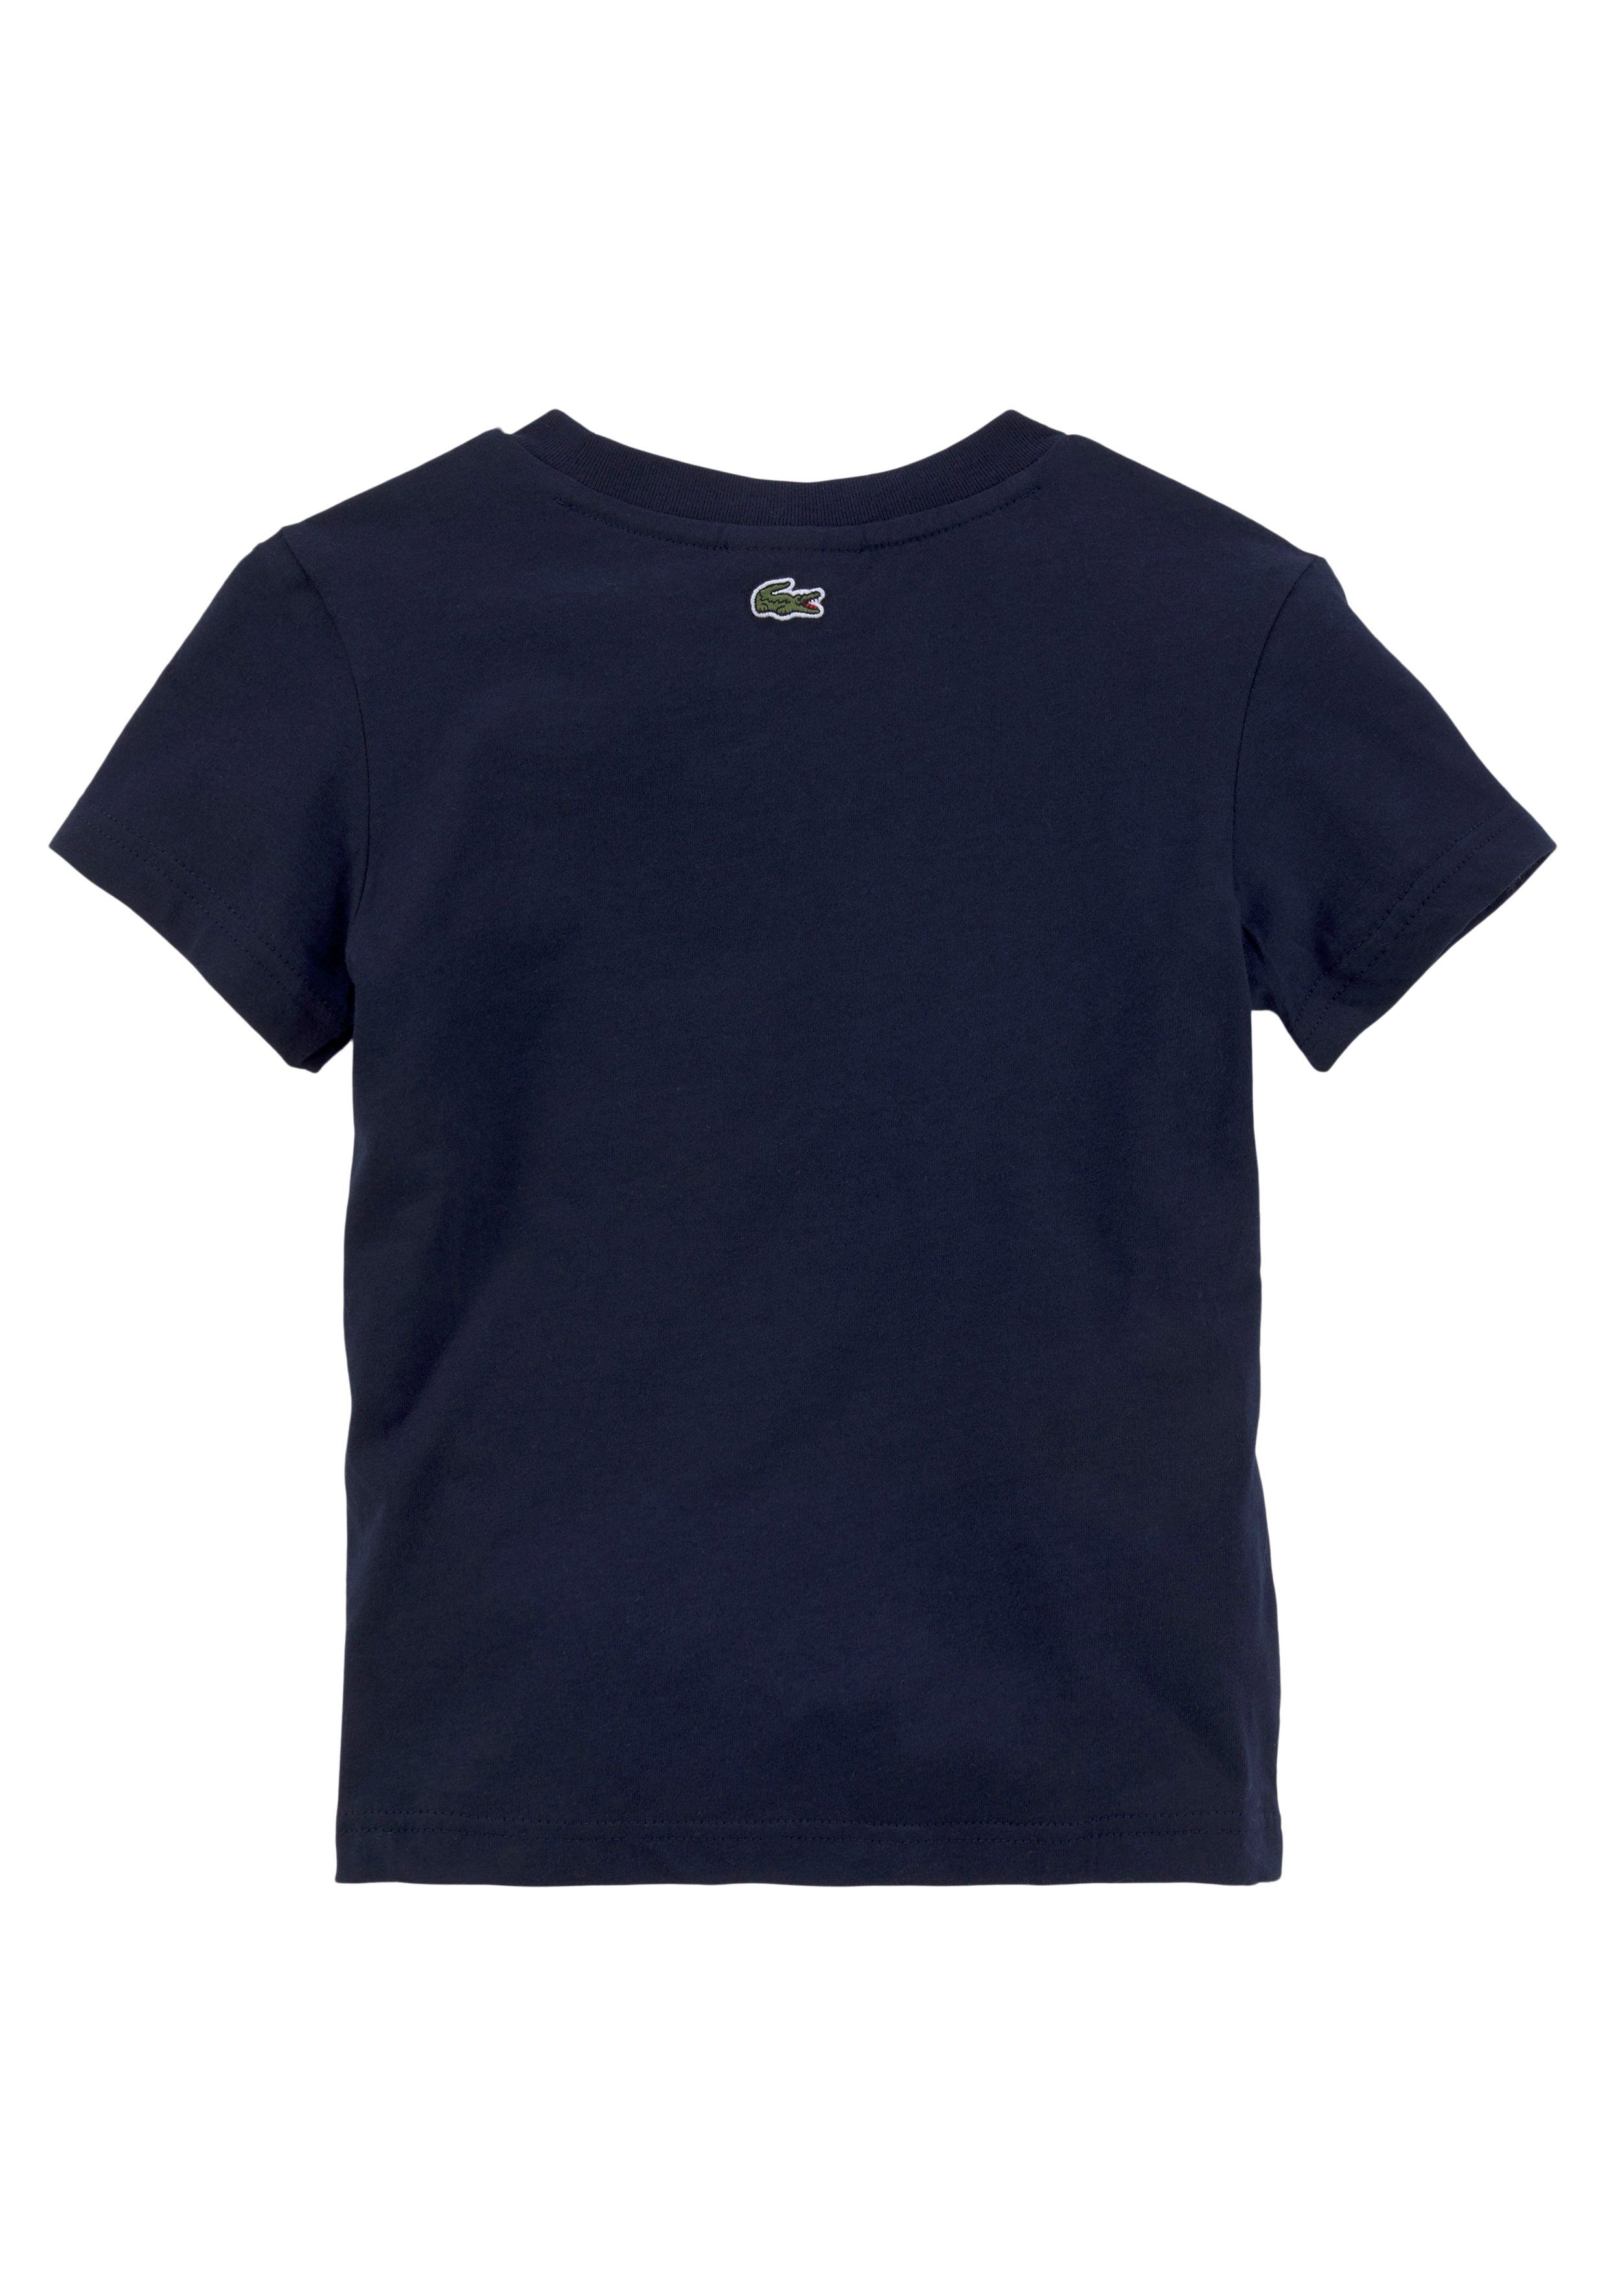 blue mit Lacoste Logodruck navy großem T-Shirt